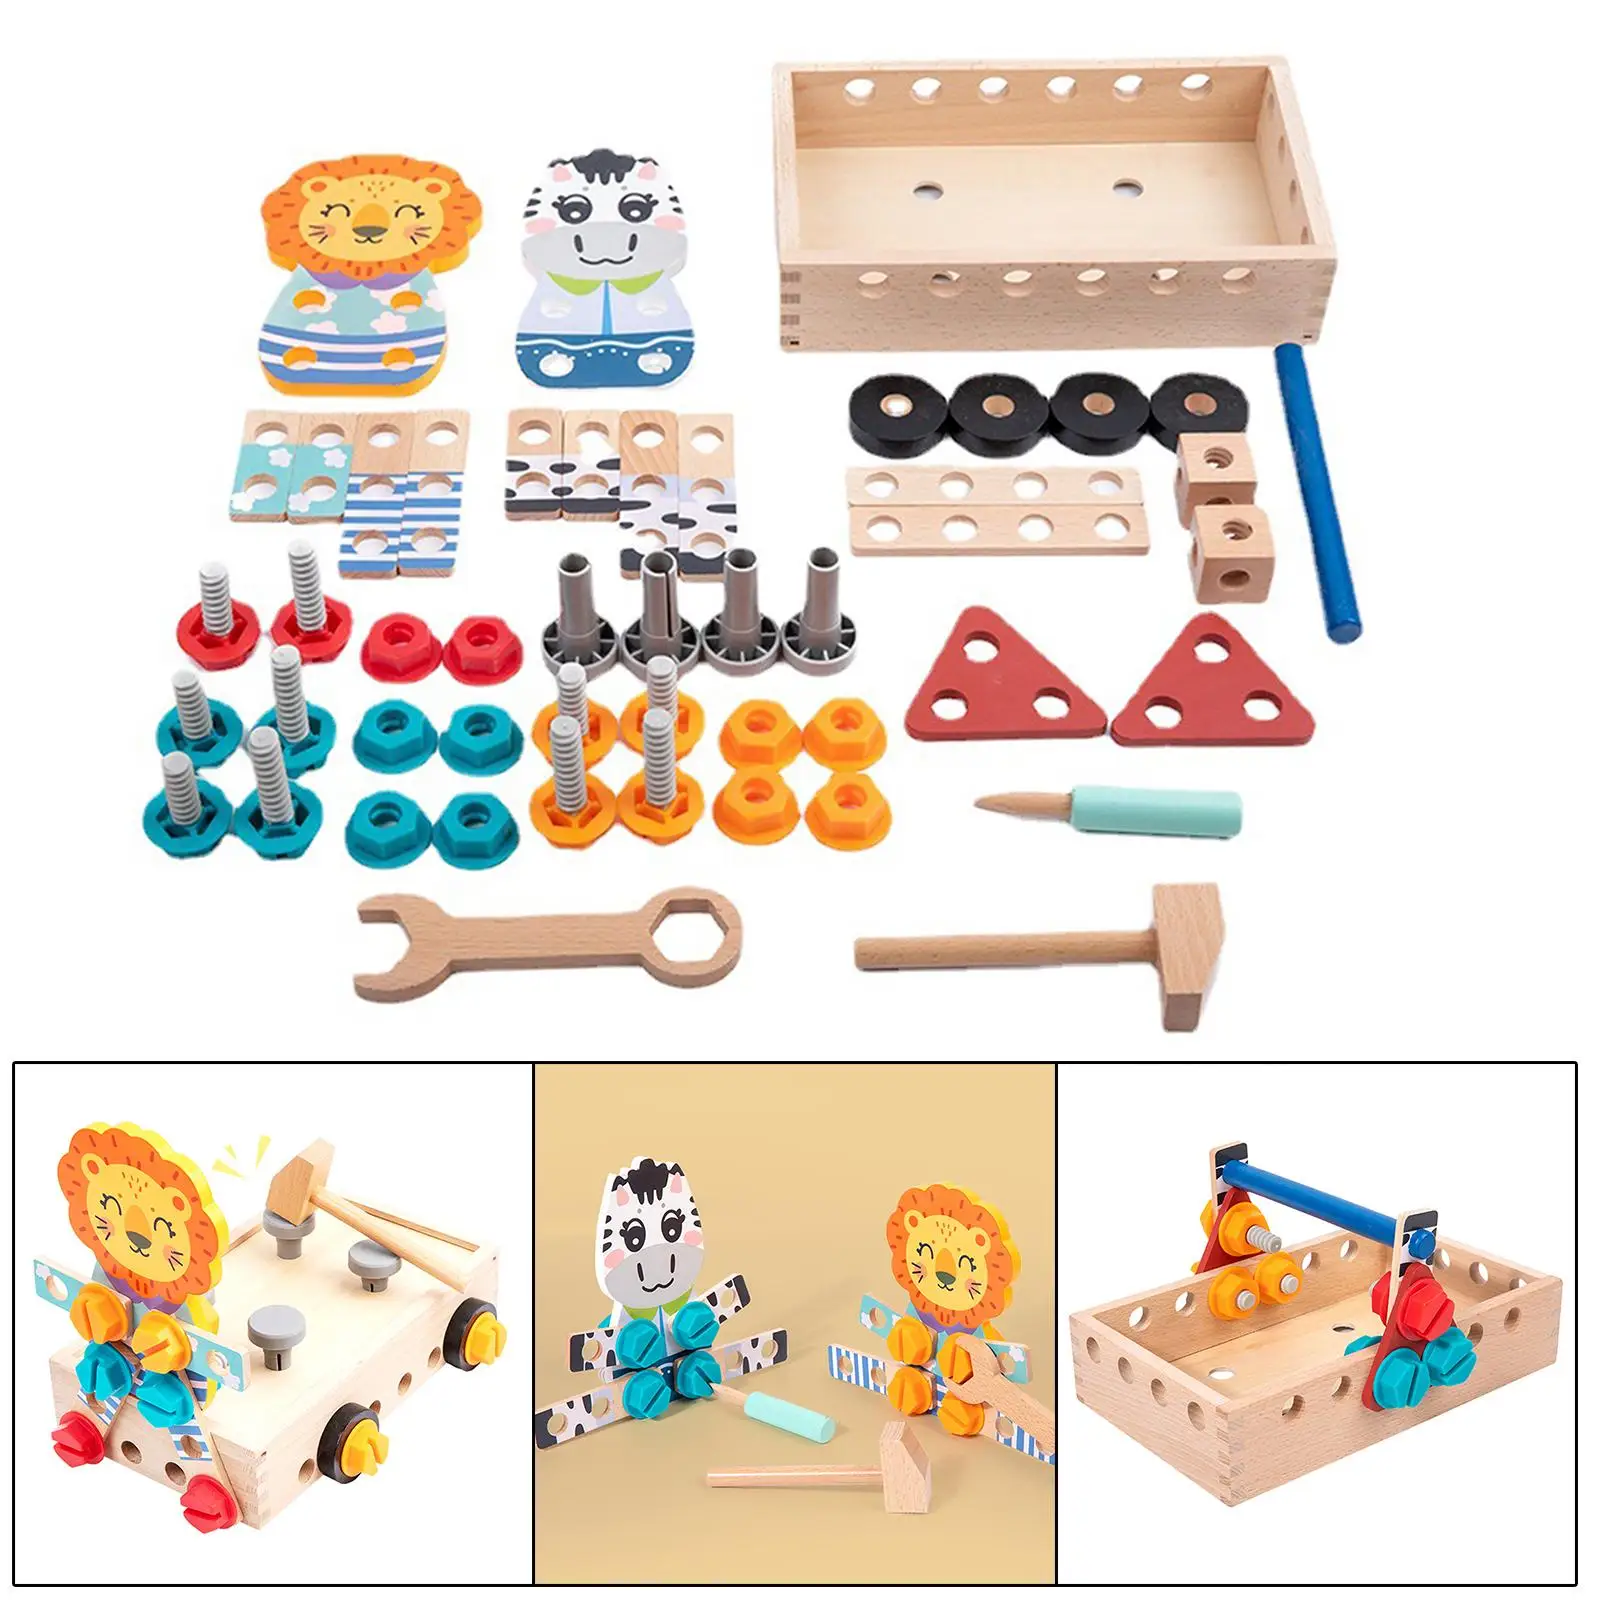 DIY Construction Toy Fine Motor Skills Montessori Portable Wooden Tool Set for Role Play Preschool Indoor Activities Education